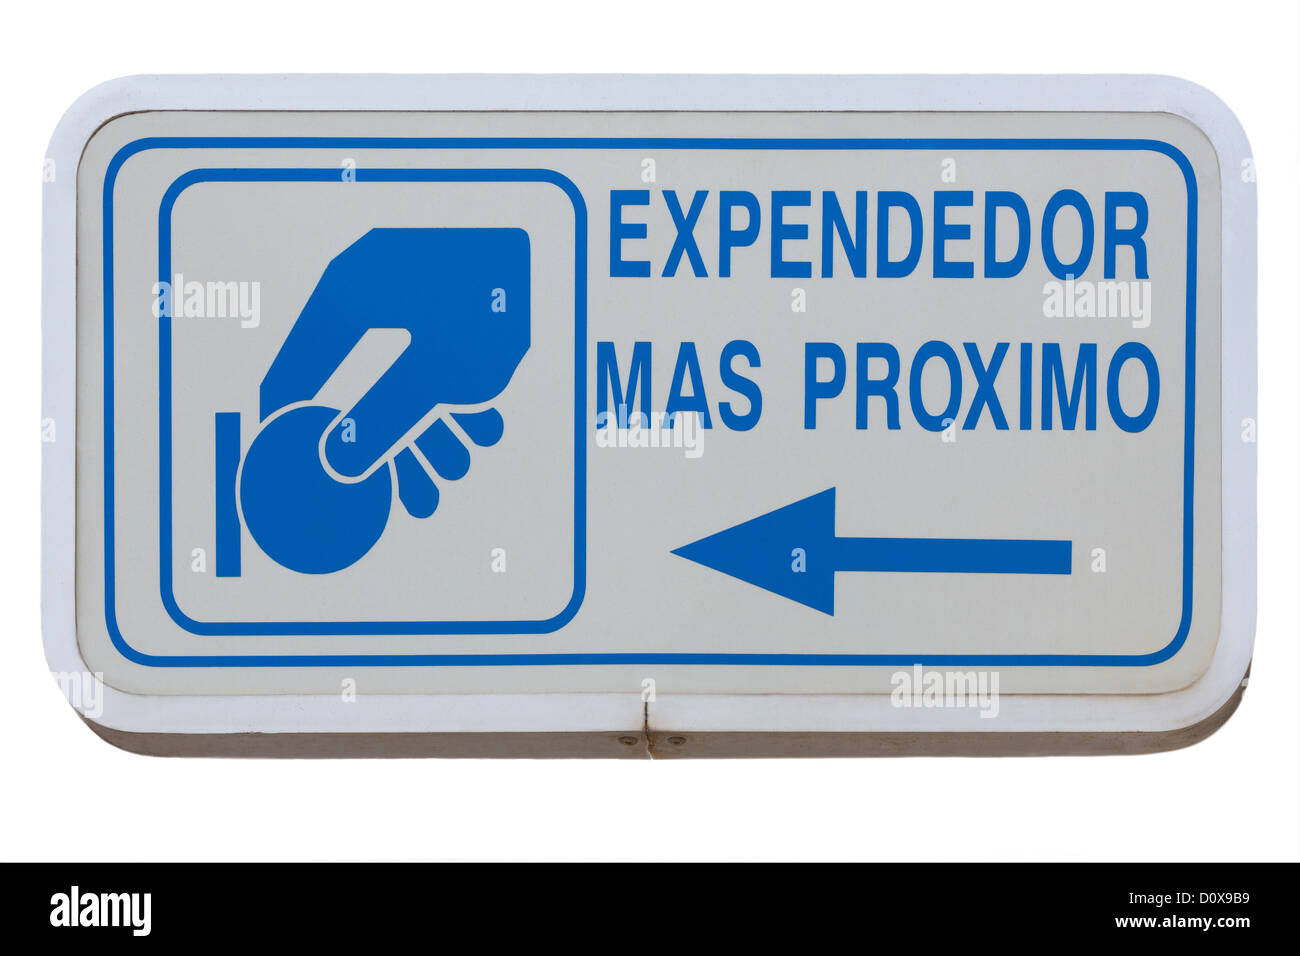 Spanisch melden bitte hier bezahlen: Expendedor Mas Proximo, Hinweis auf die nächstgelegene Parkuhr in Andalusien, Andalusien, Spanien Stockfoto